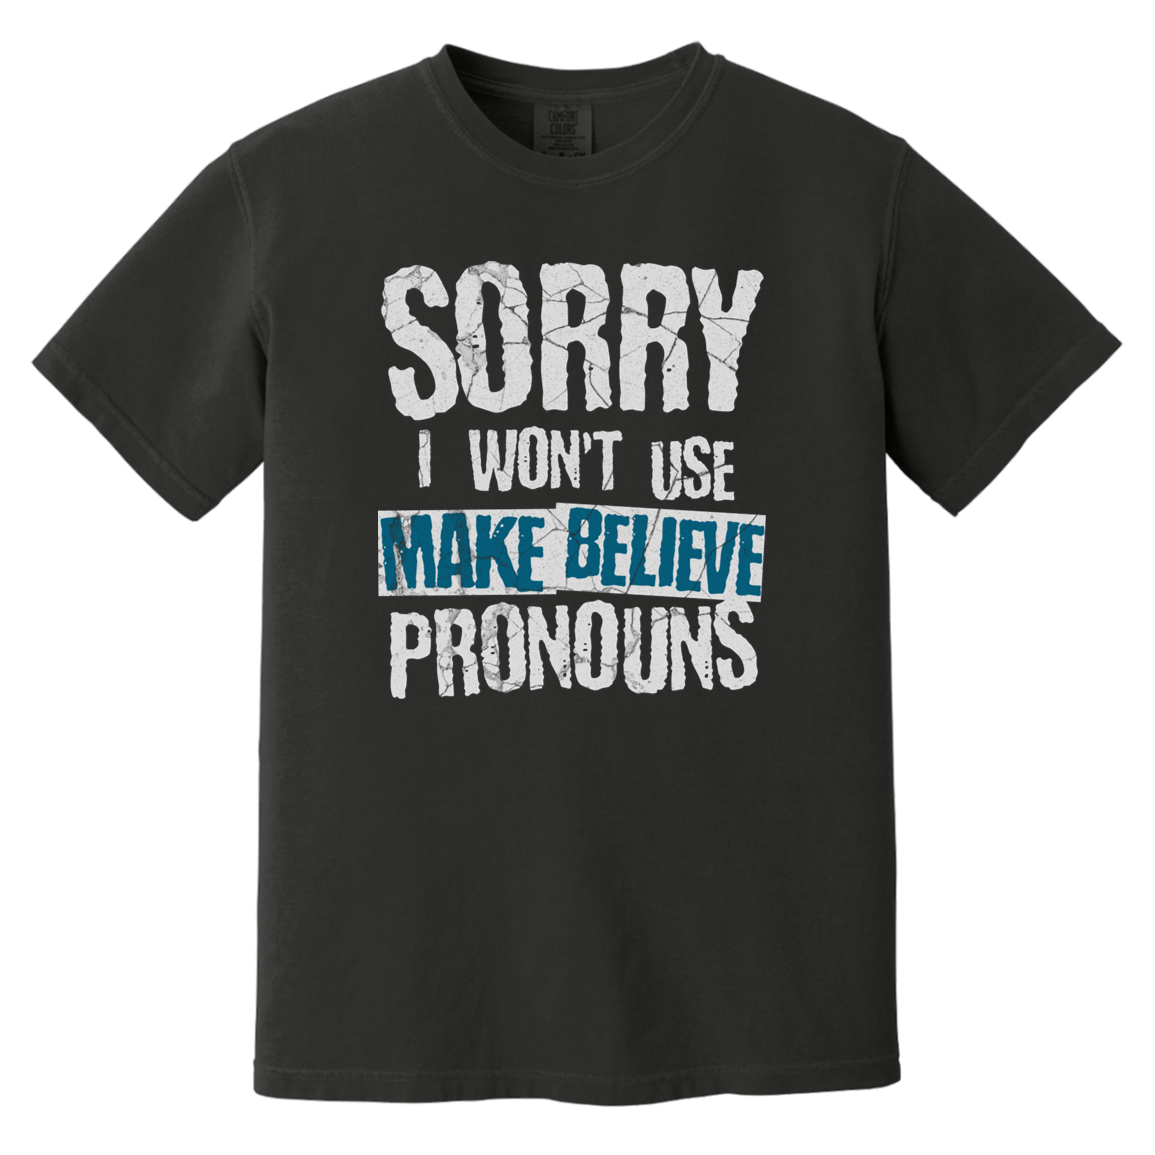 Pronouns Tshirt for those who refuse to use silly made up pronouns, antiwoke shirt-T-Shirts-PureDesignTees